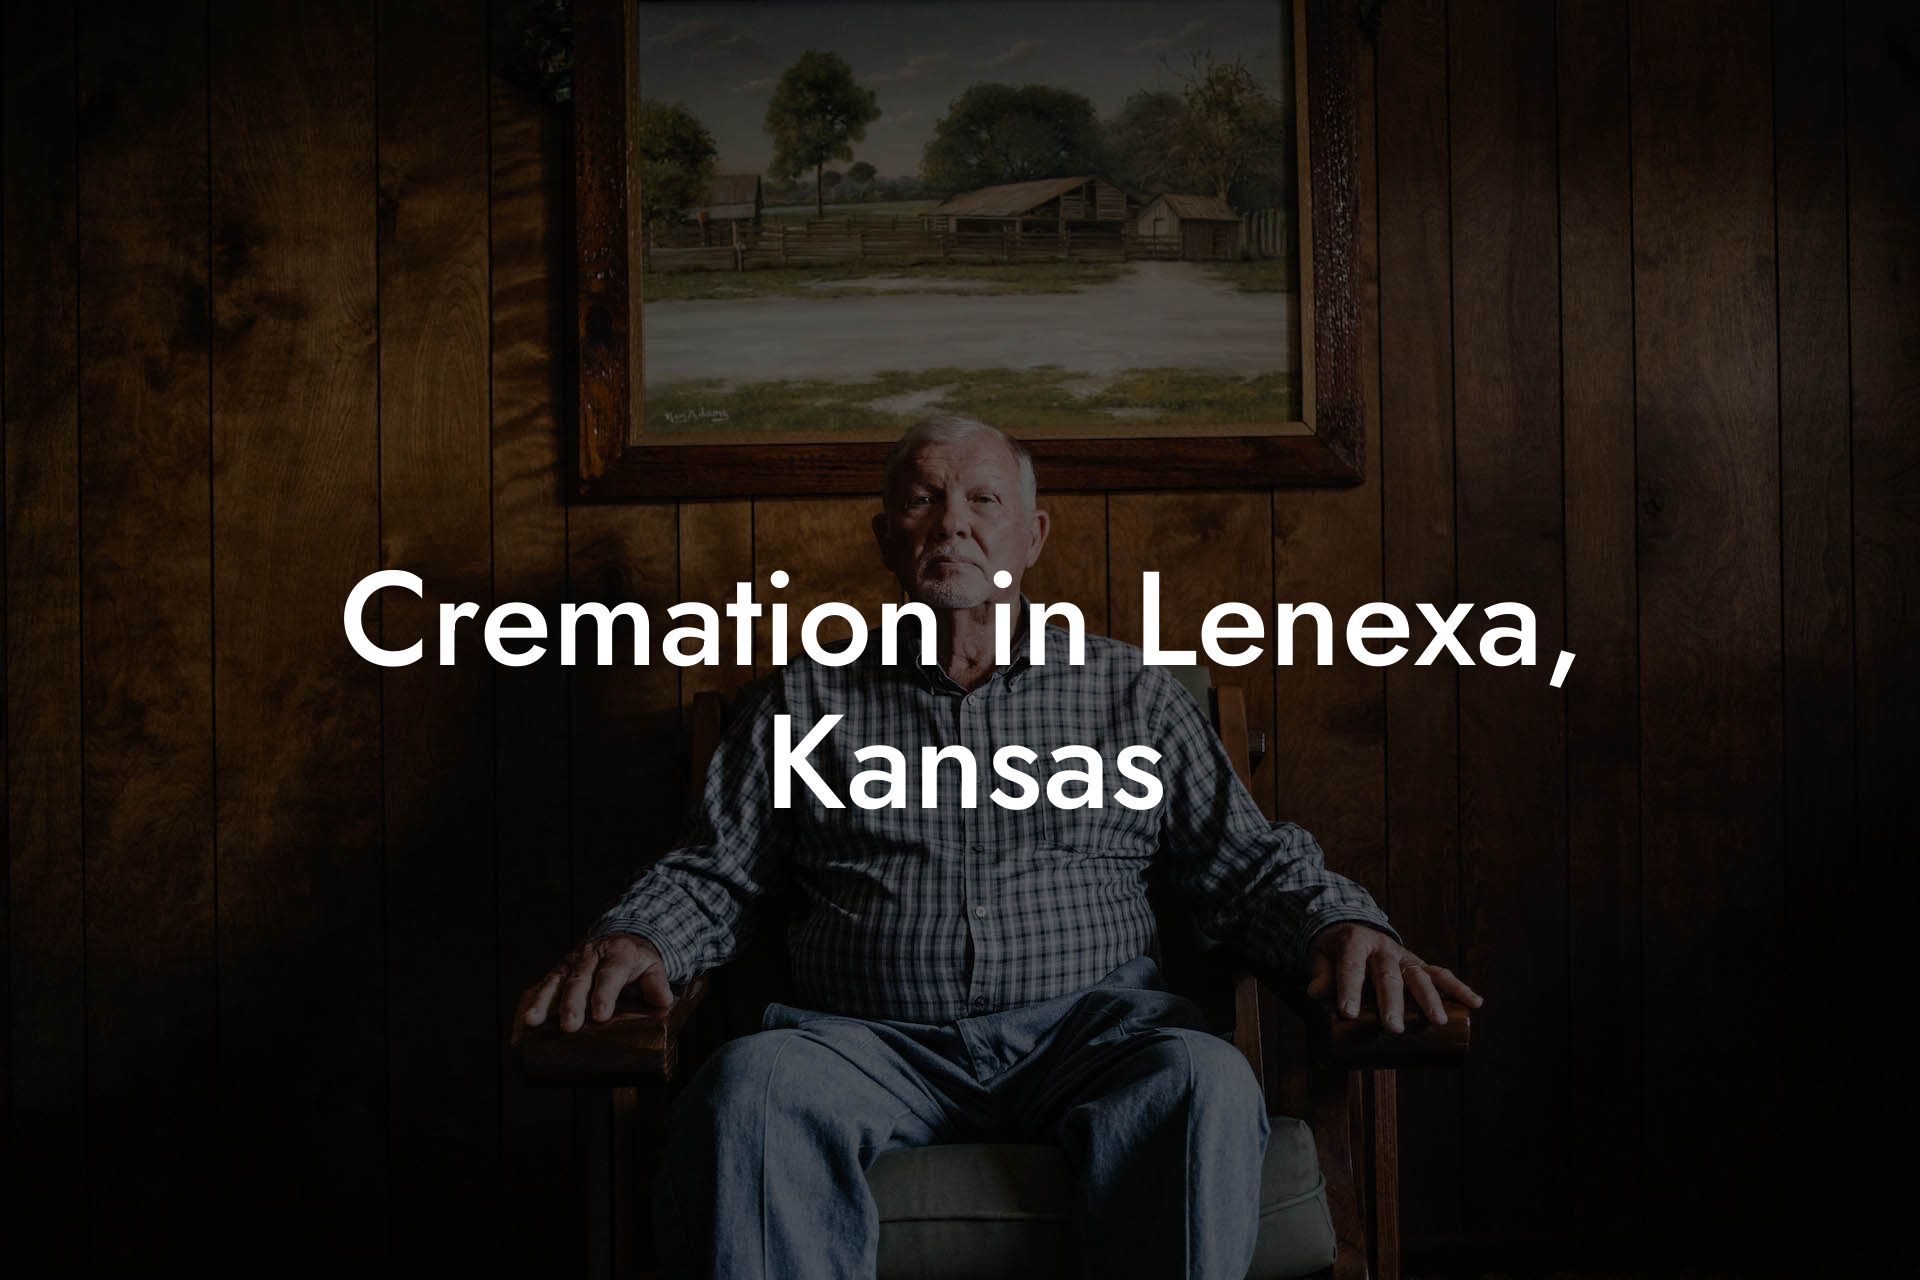 Cremation in Lenexa, Kansas